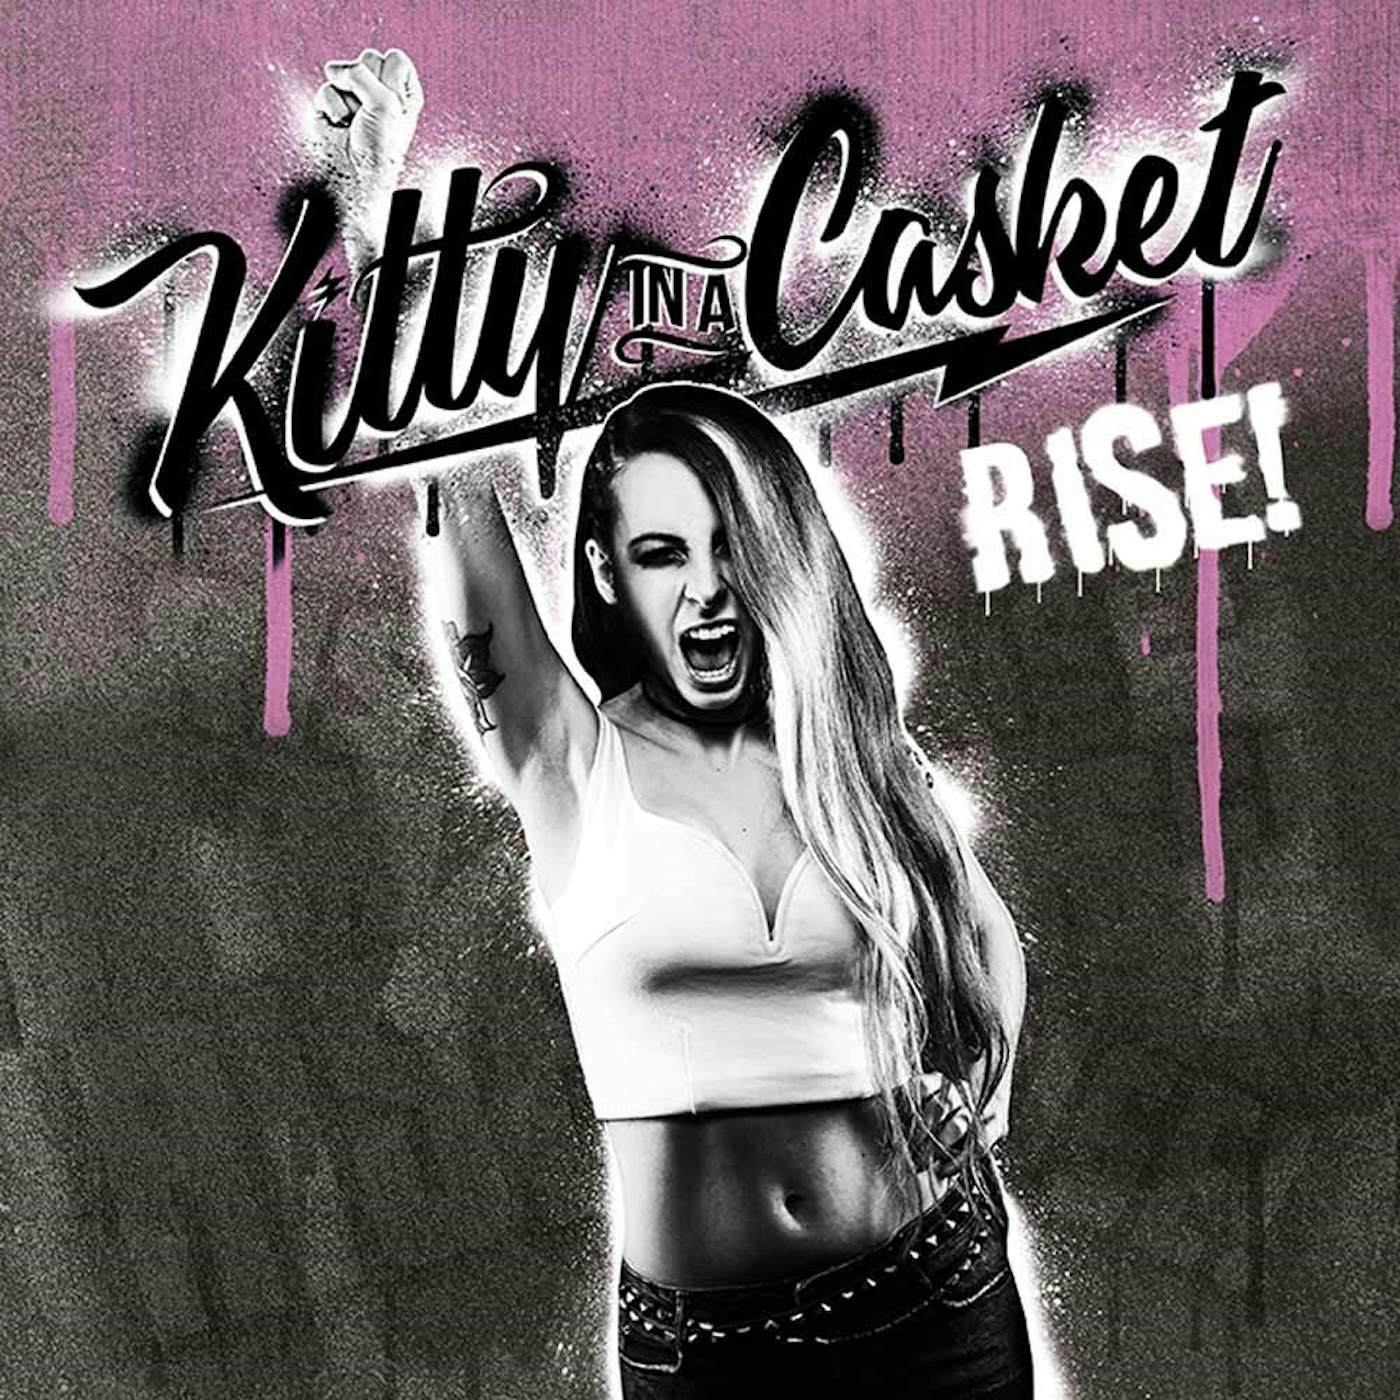 Kitty In A Casket LP - Rise (Pink Vinyl+Cd)